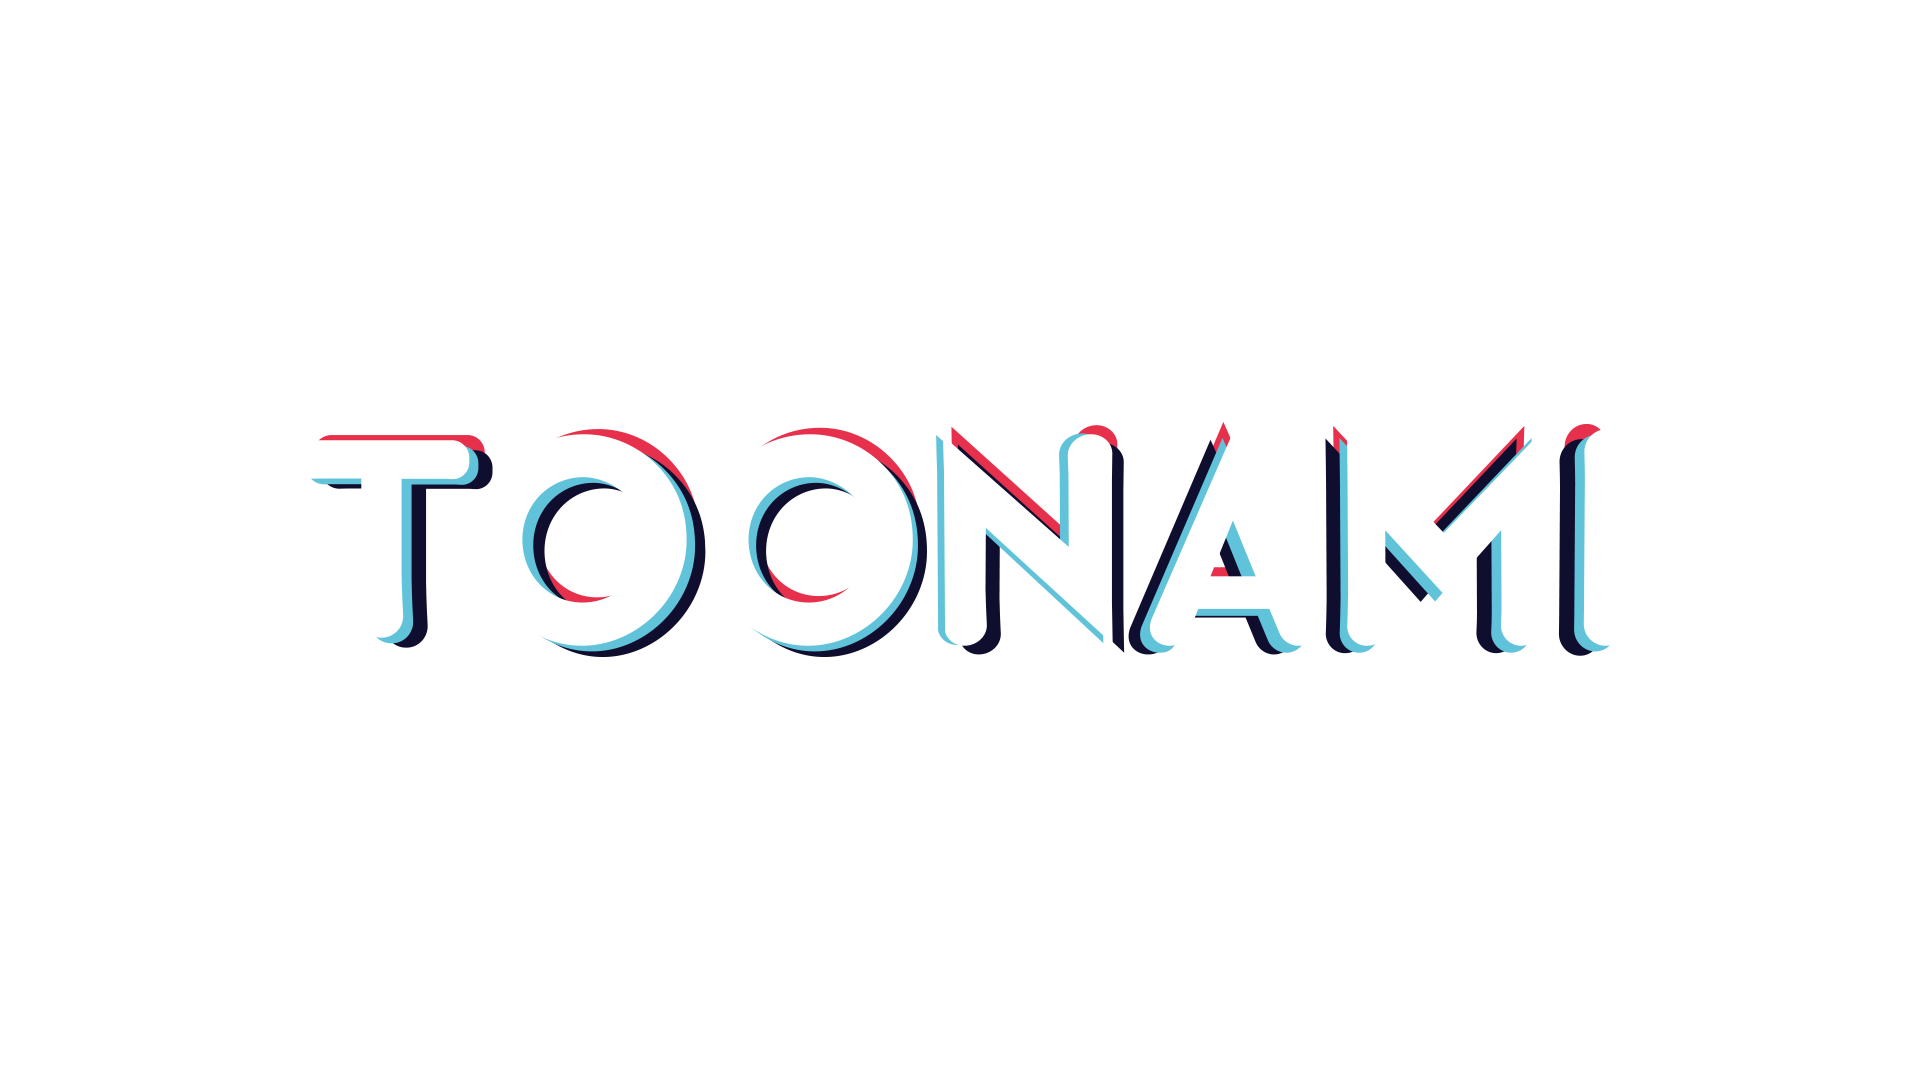 Toonami logo